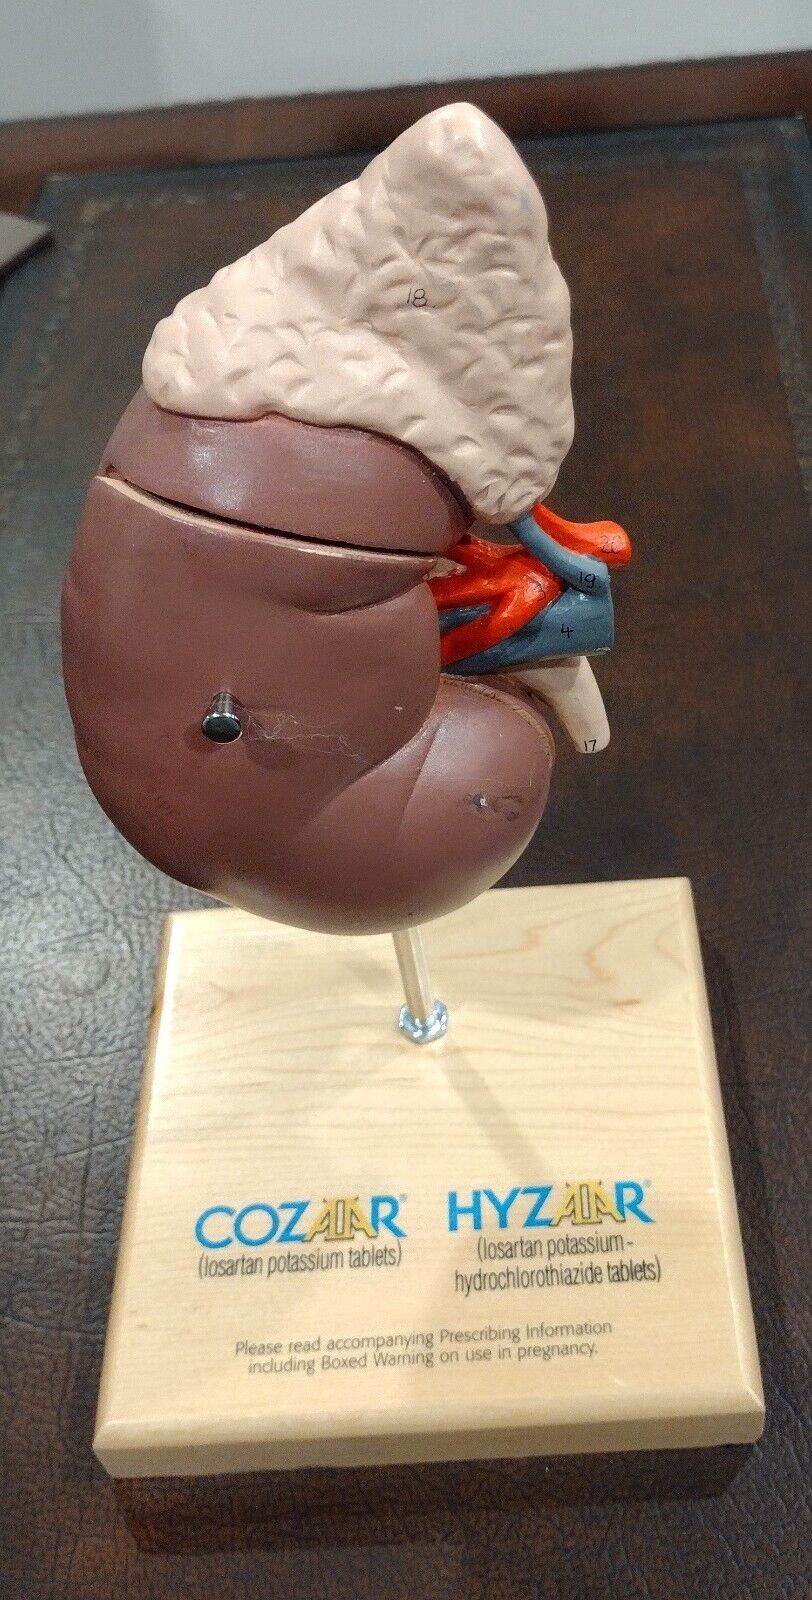 Merck Anatomical Kidney Doctors’ Office Model Cozar/Hyzar Advertising